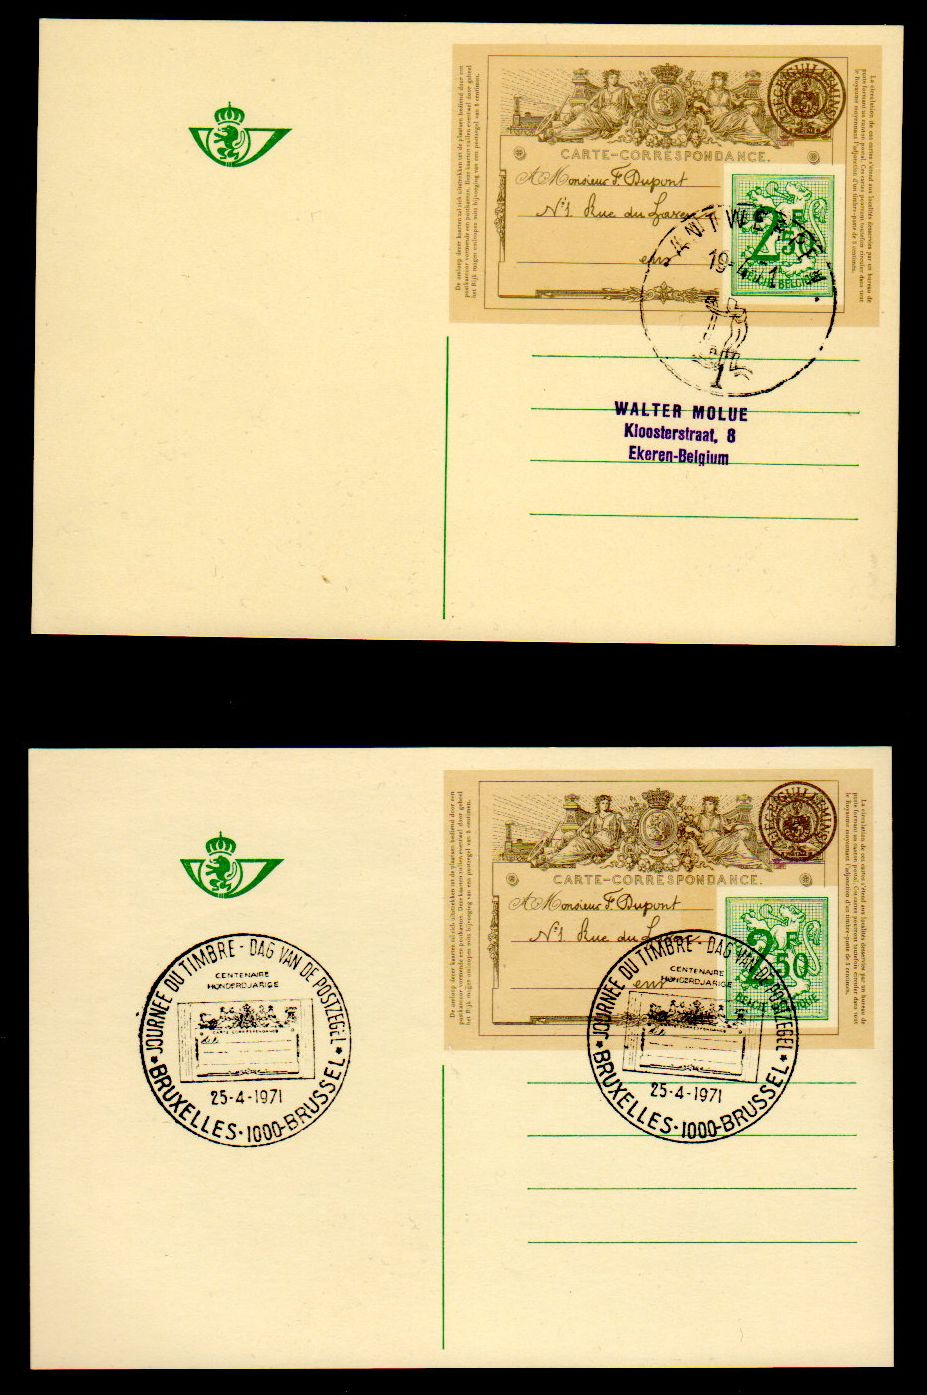 belgium postal card fd cx stamp day cx